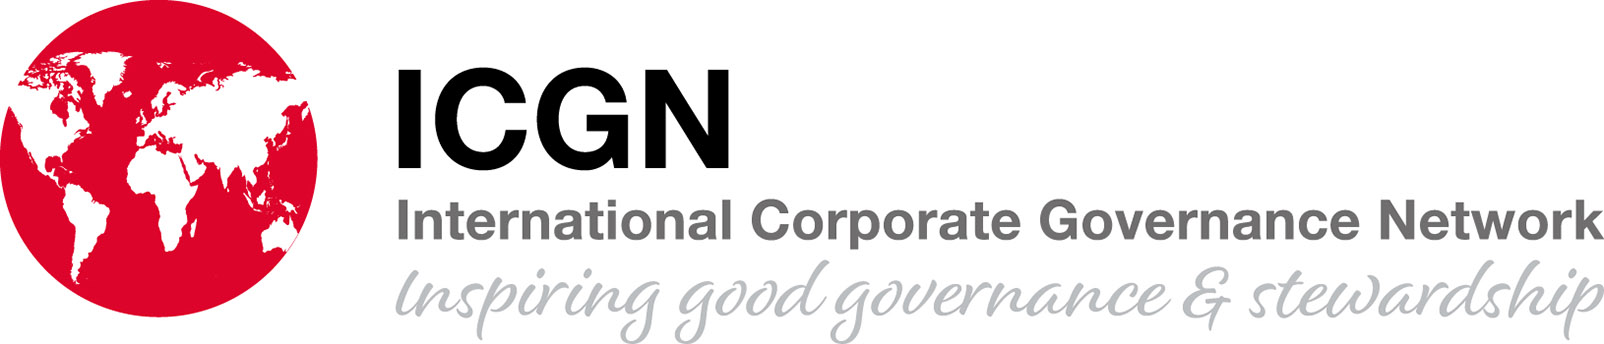 ICGN_Logo